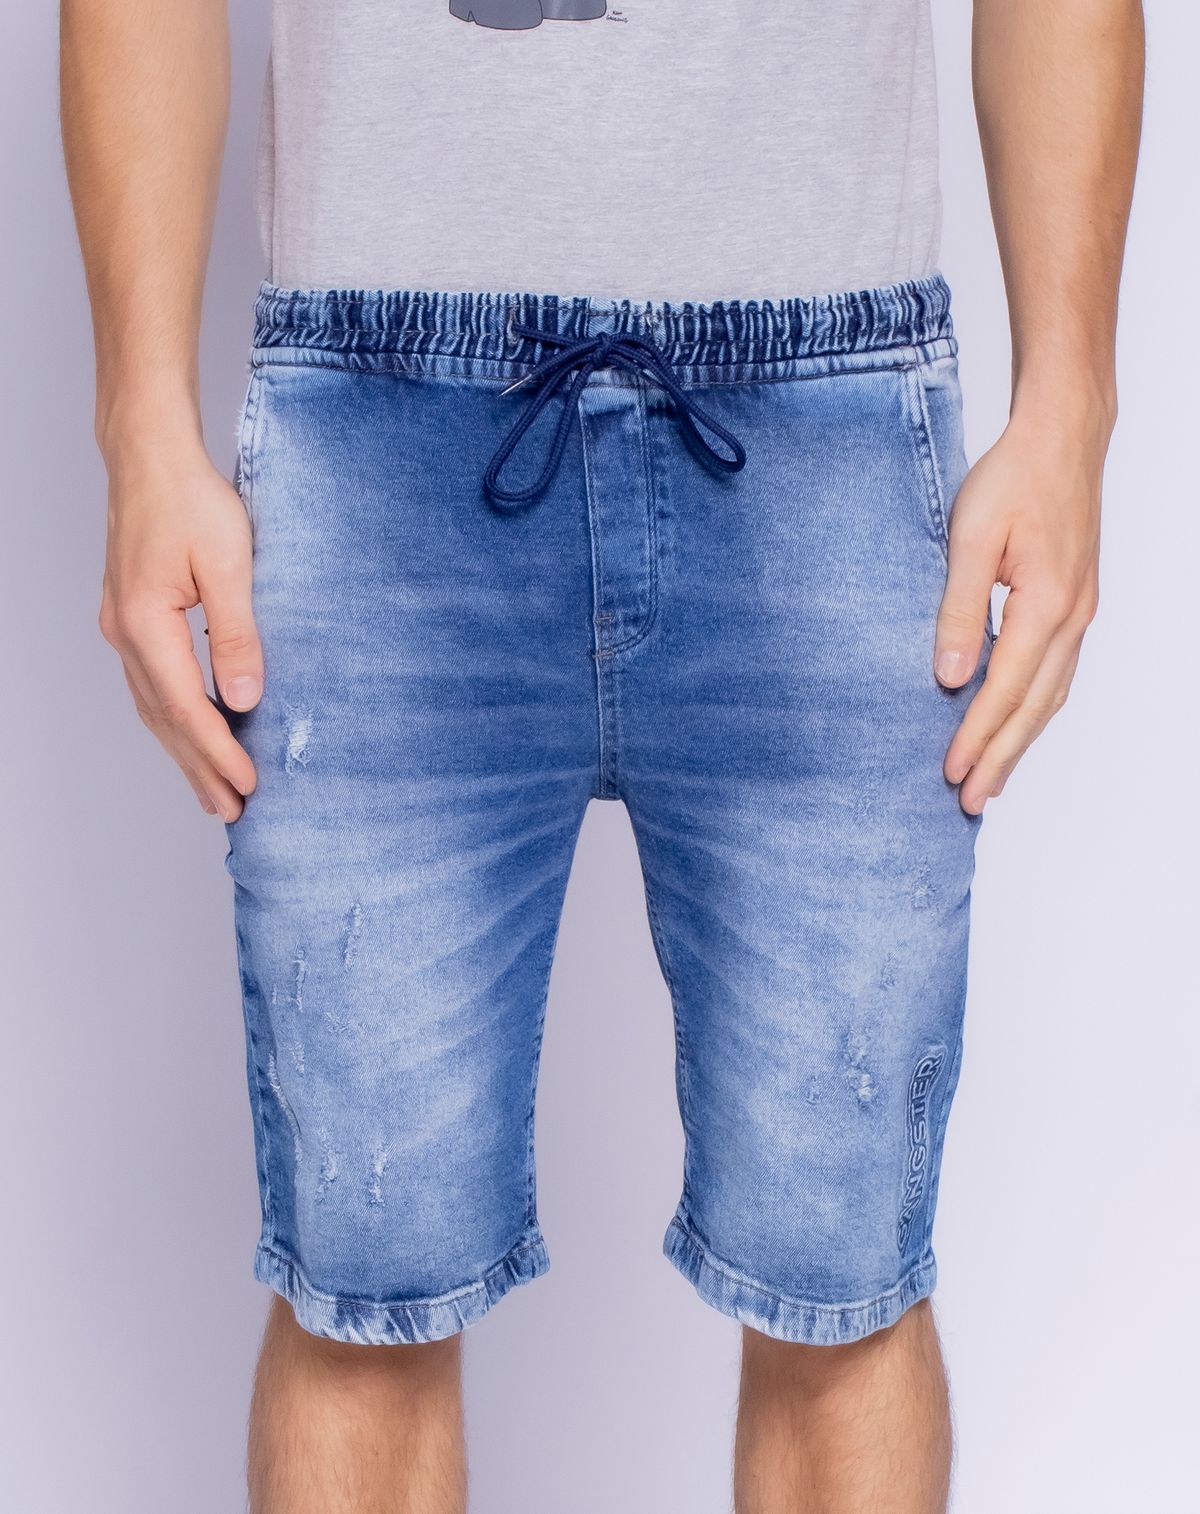 608196001-bermuda-jeans-masculina-bolsos-jeans-p-630